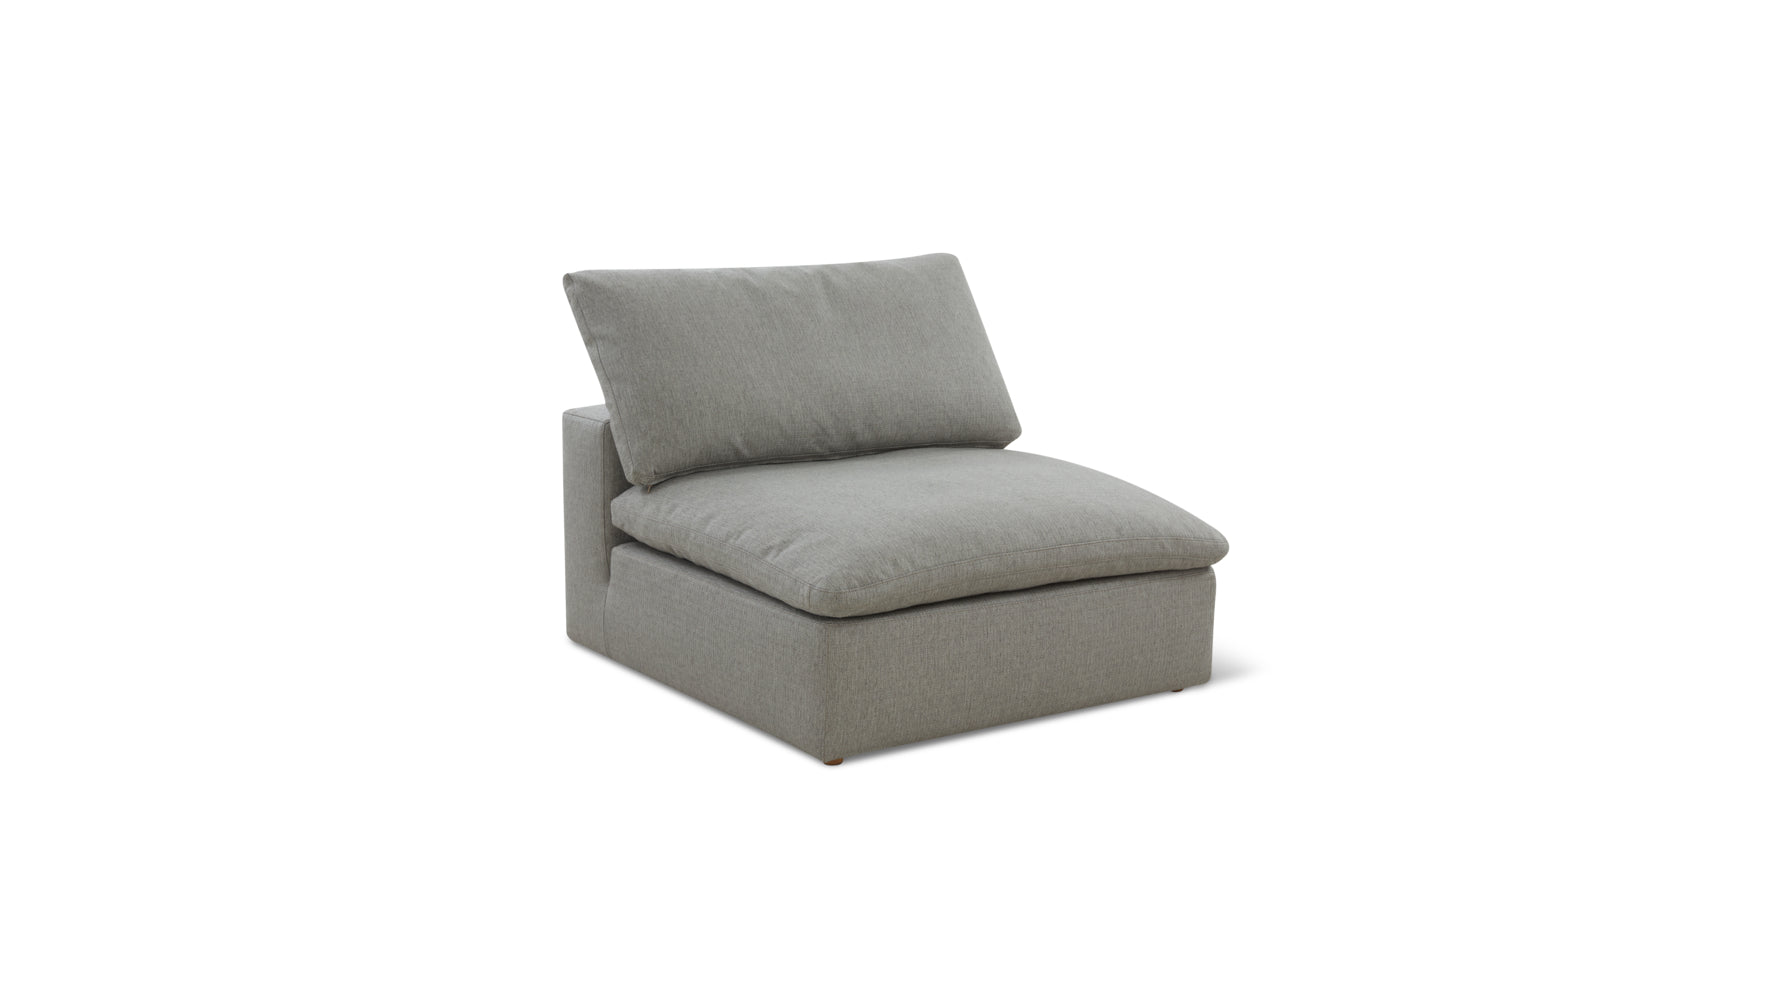 Movie Night™ Armless Chair, Large, Mist - Image 2